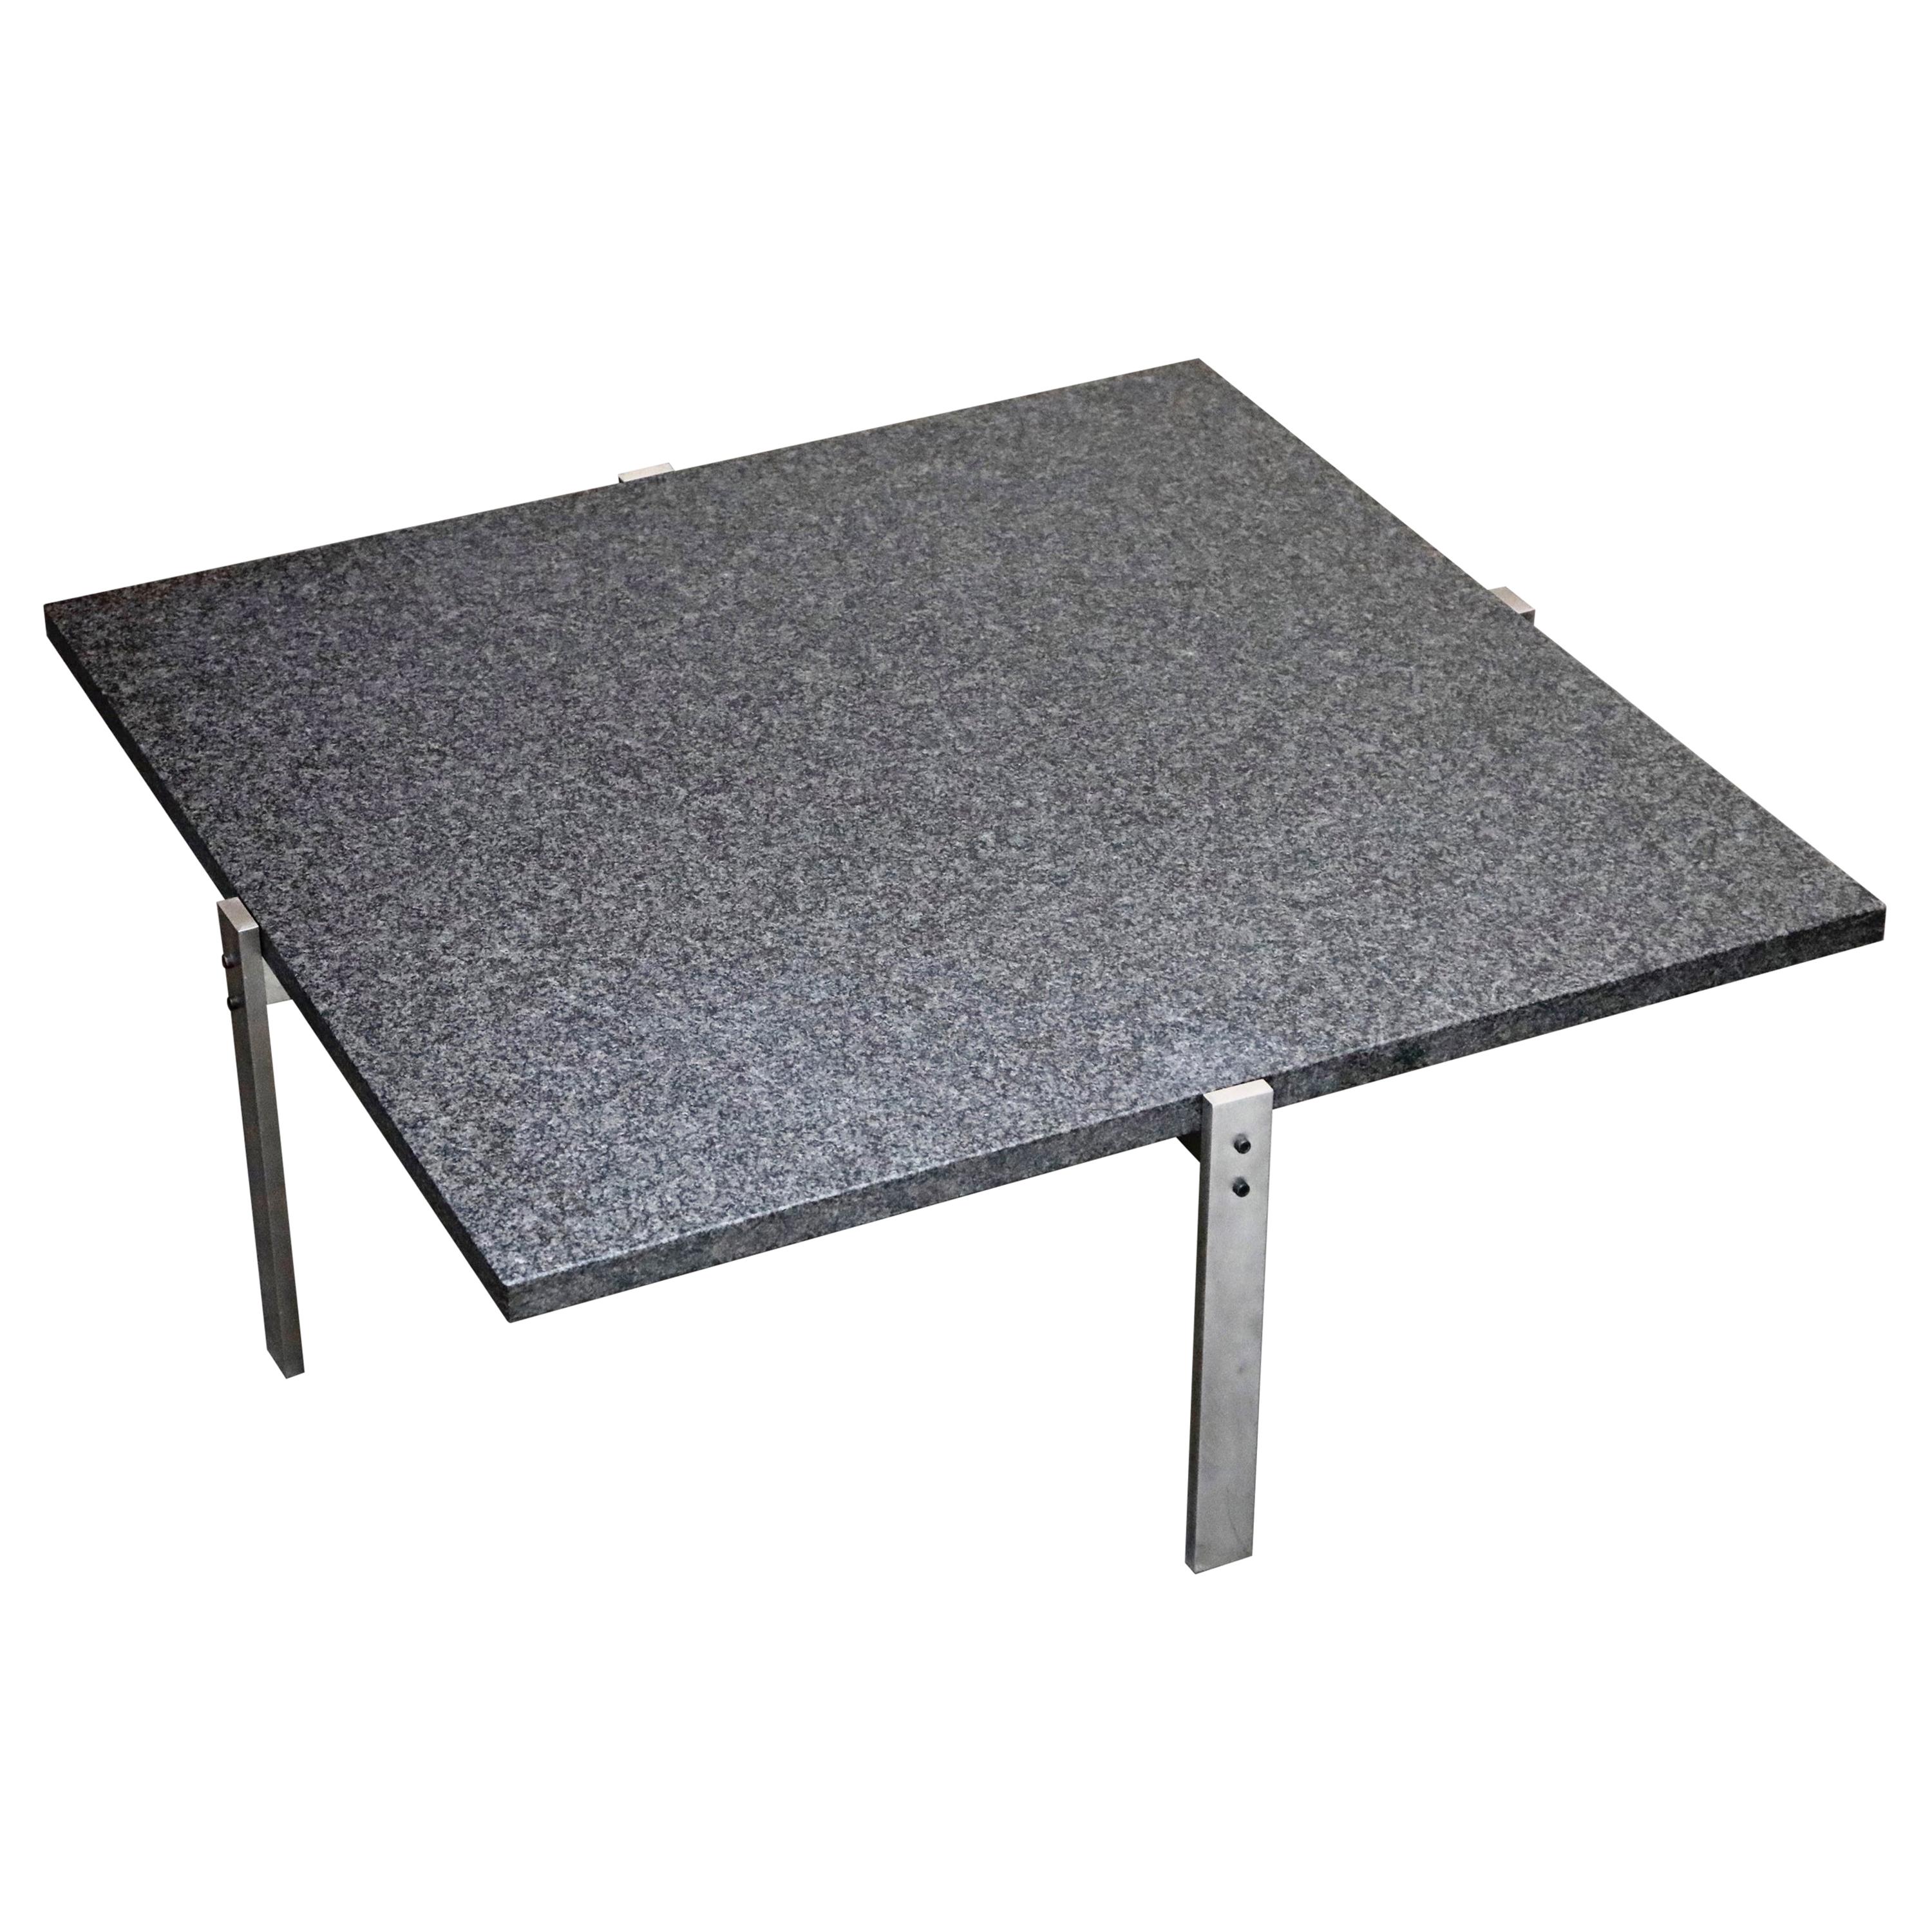 Poul Kjærholm 'PK-65' Steel and Honed Granite Coffee Table, Signed